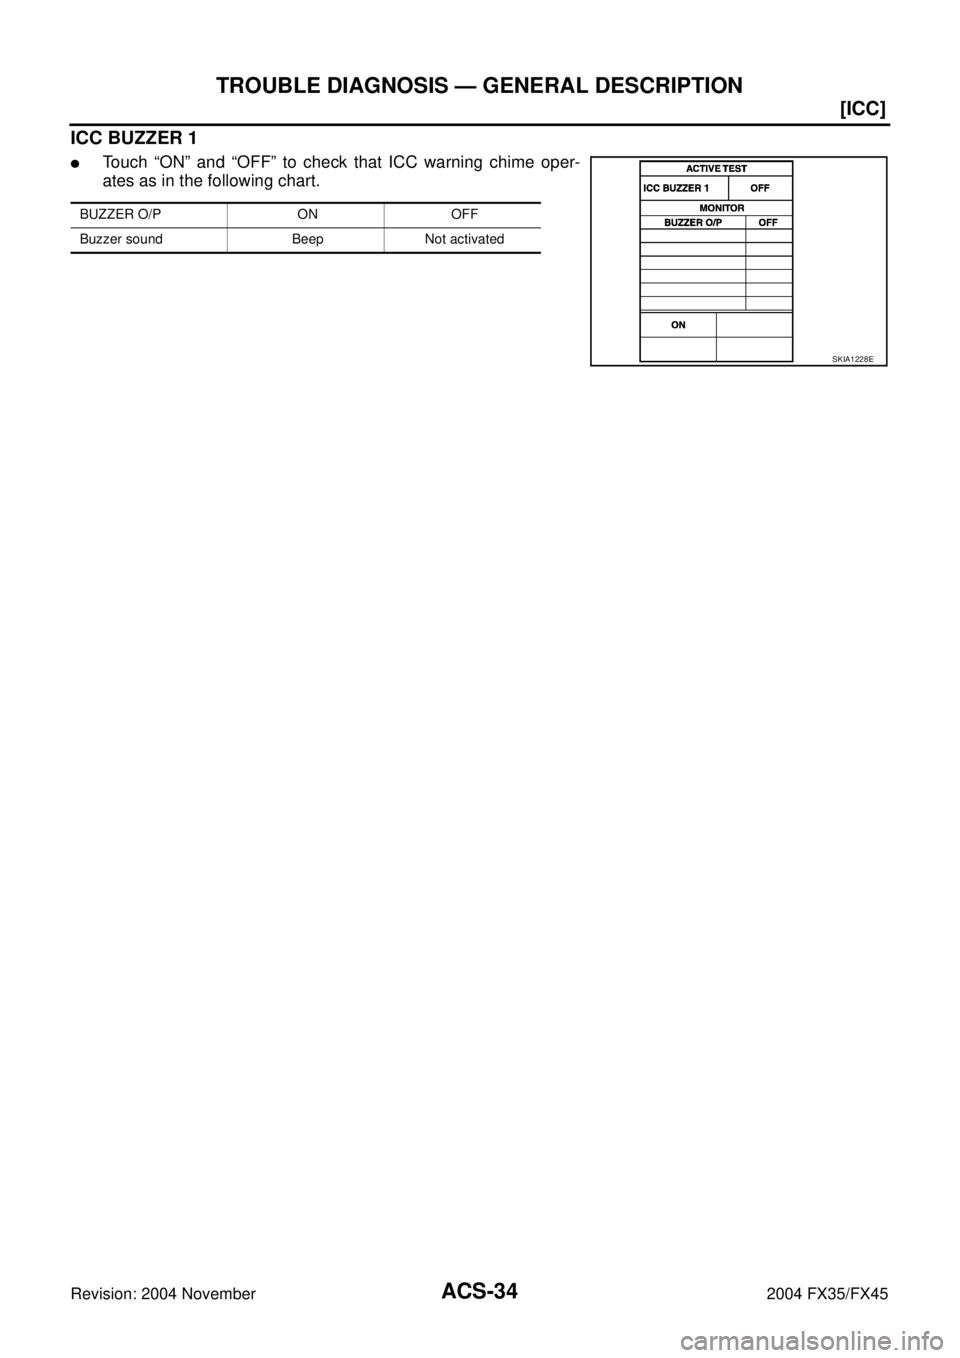 INFINITI FX35 2004 Workshop Manual ACS-34
[ICC]
TROUBLE DIAGNOSIS — GENERAL DESCRIPTION
Revision: 2004 November 2004 FX35/FX45
ICC BUZZER 1
Touch “ON” and “OFF” to check that ICC warning chime oper-
ates as in the following 